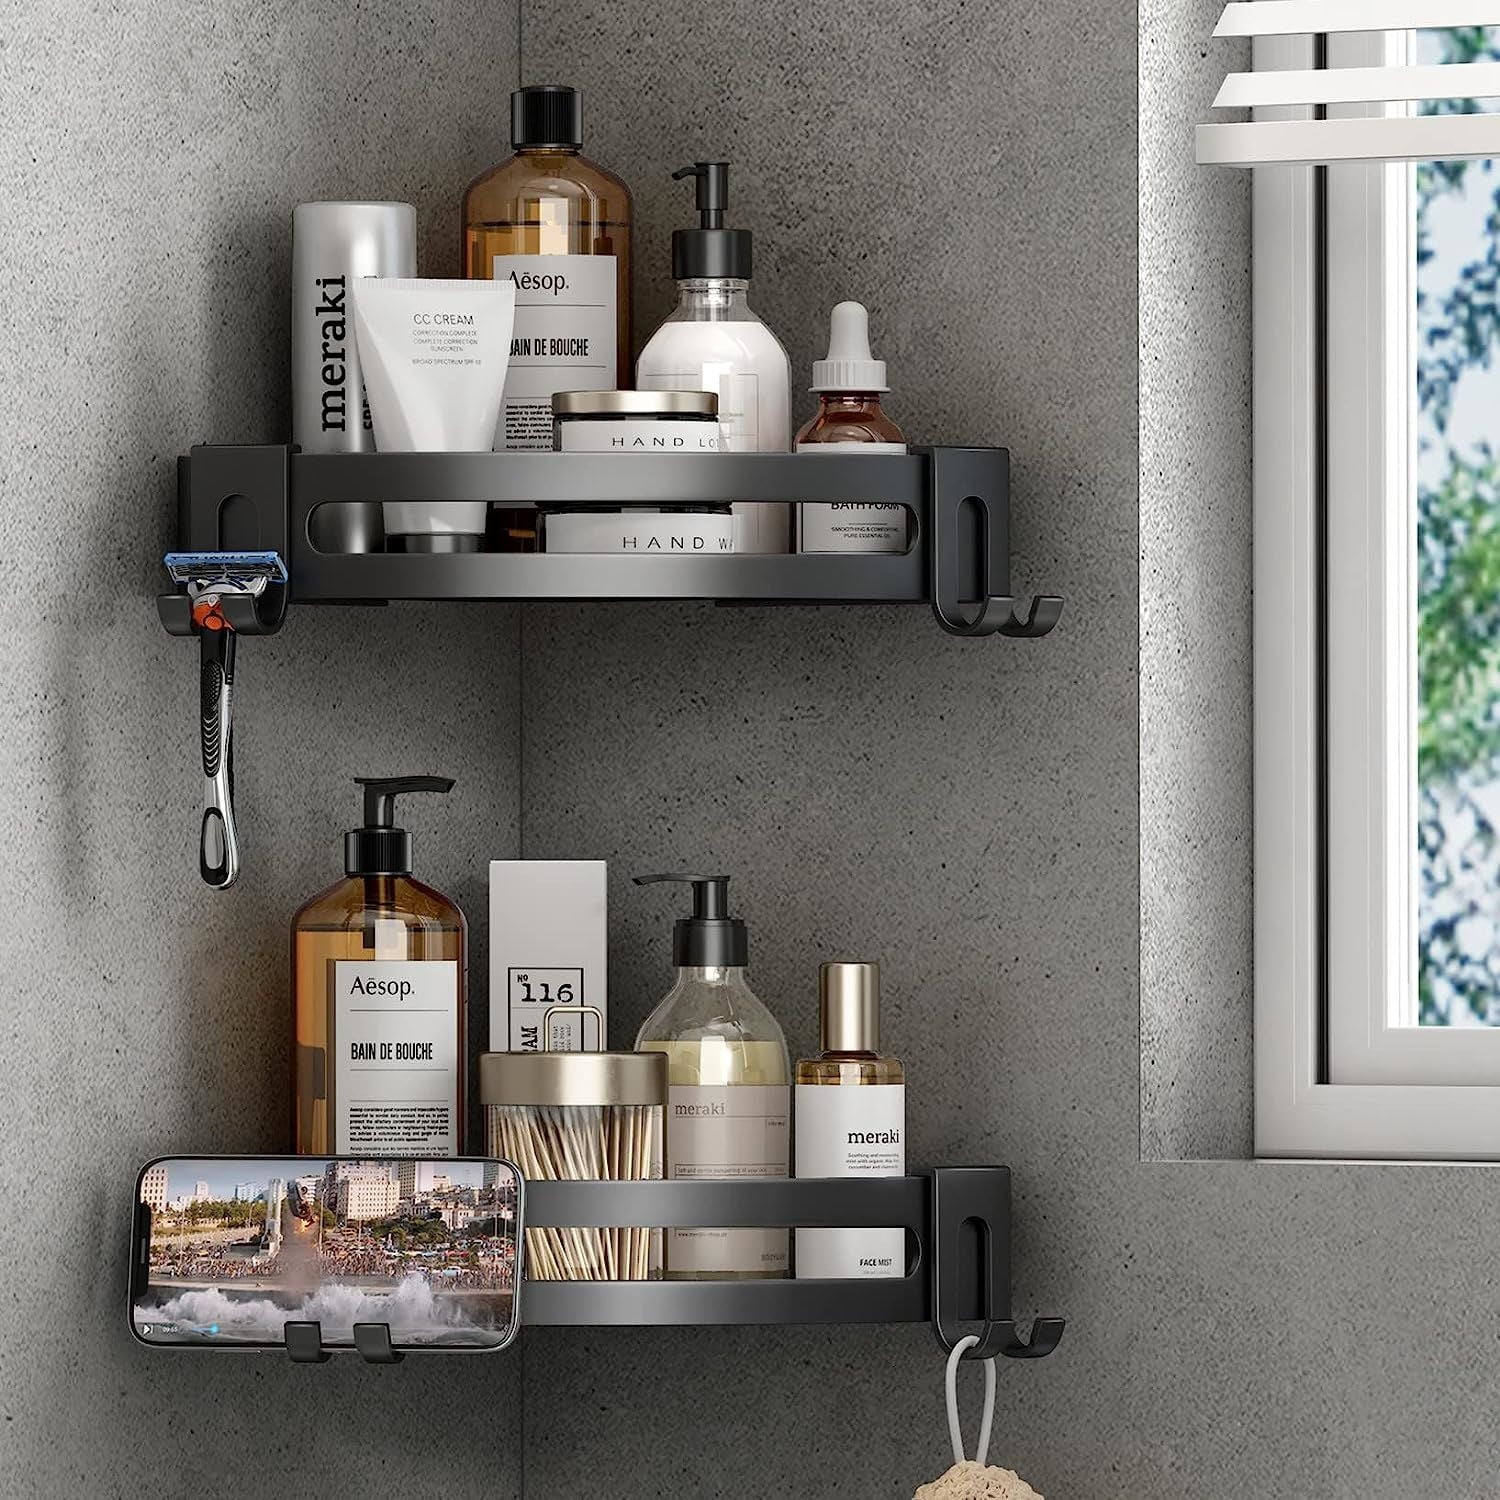 AIBLOM 2-Pack Glass Corner Shower Shelves Shampoo Soap Holder for Inside Shower, Shower Caddy Organizers for Bathroom/Bathtub Wall Corner, Shower